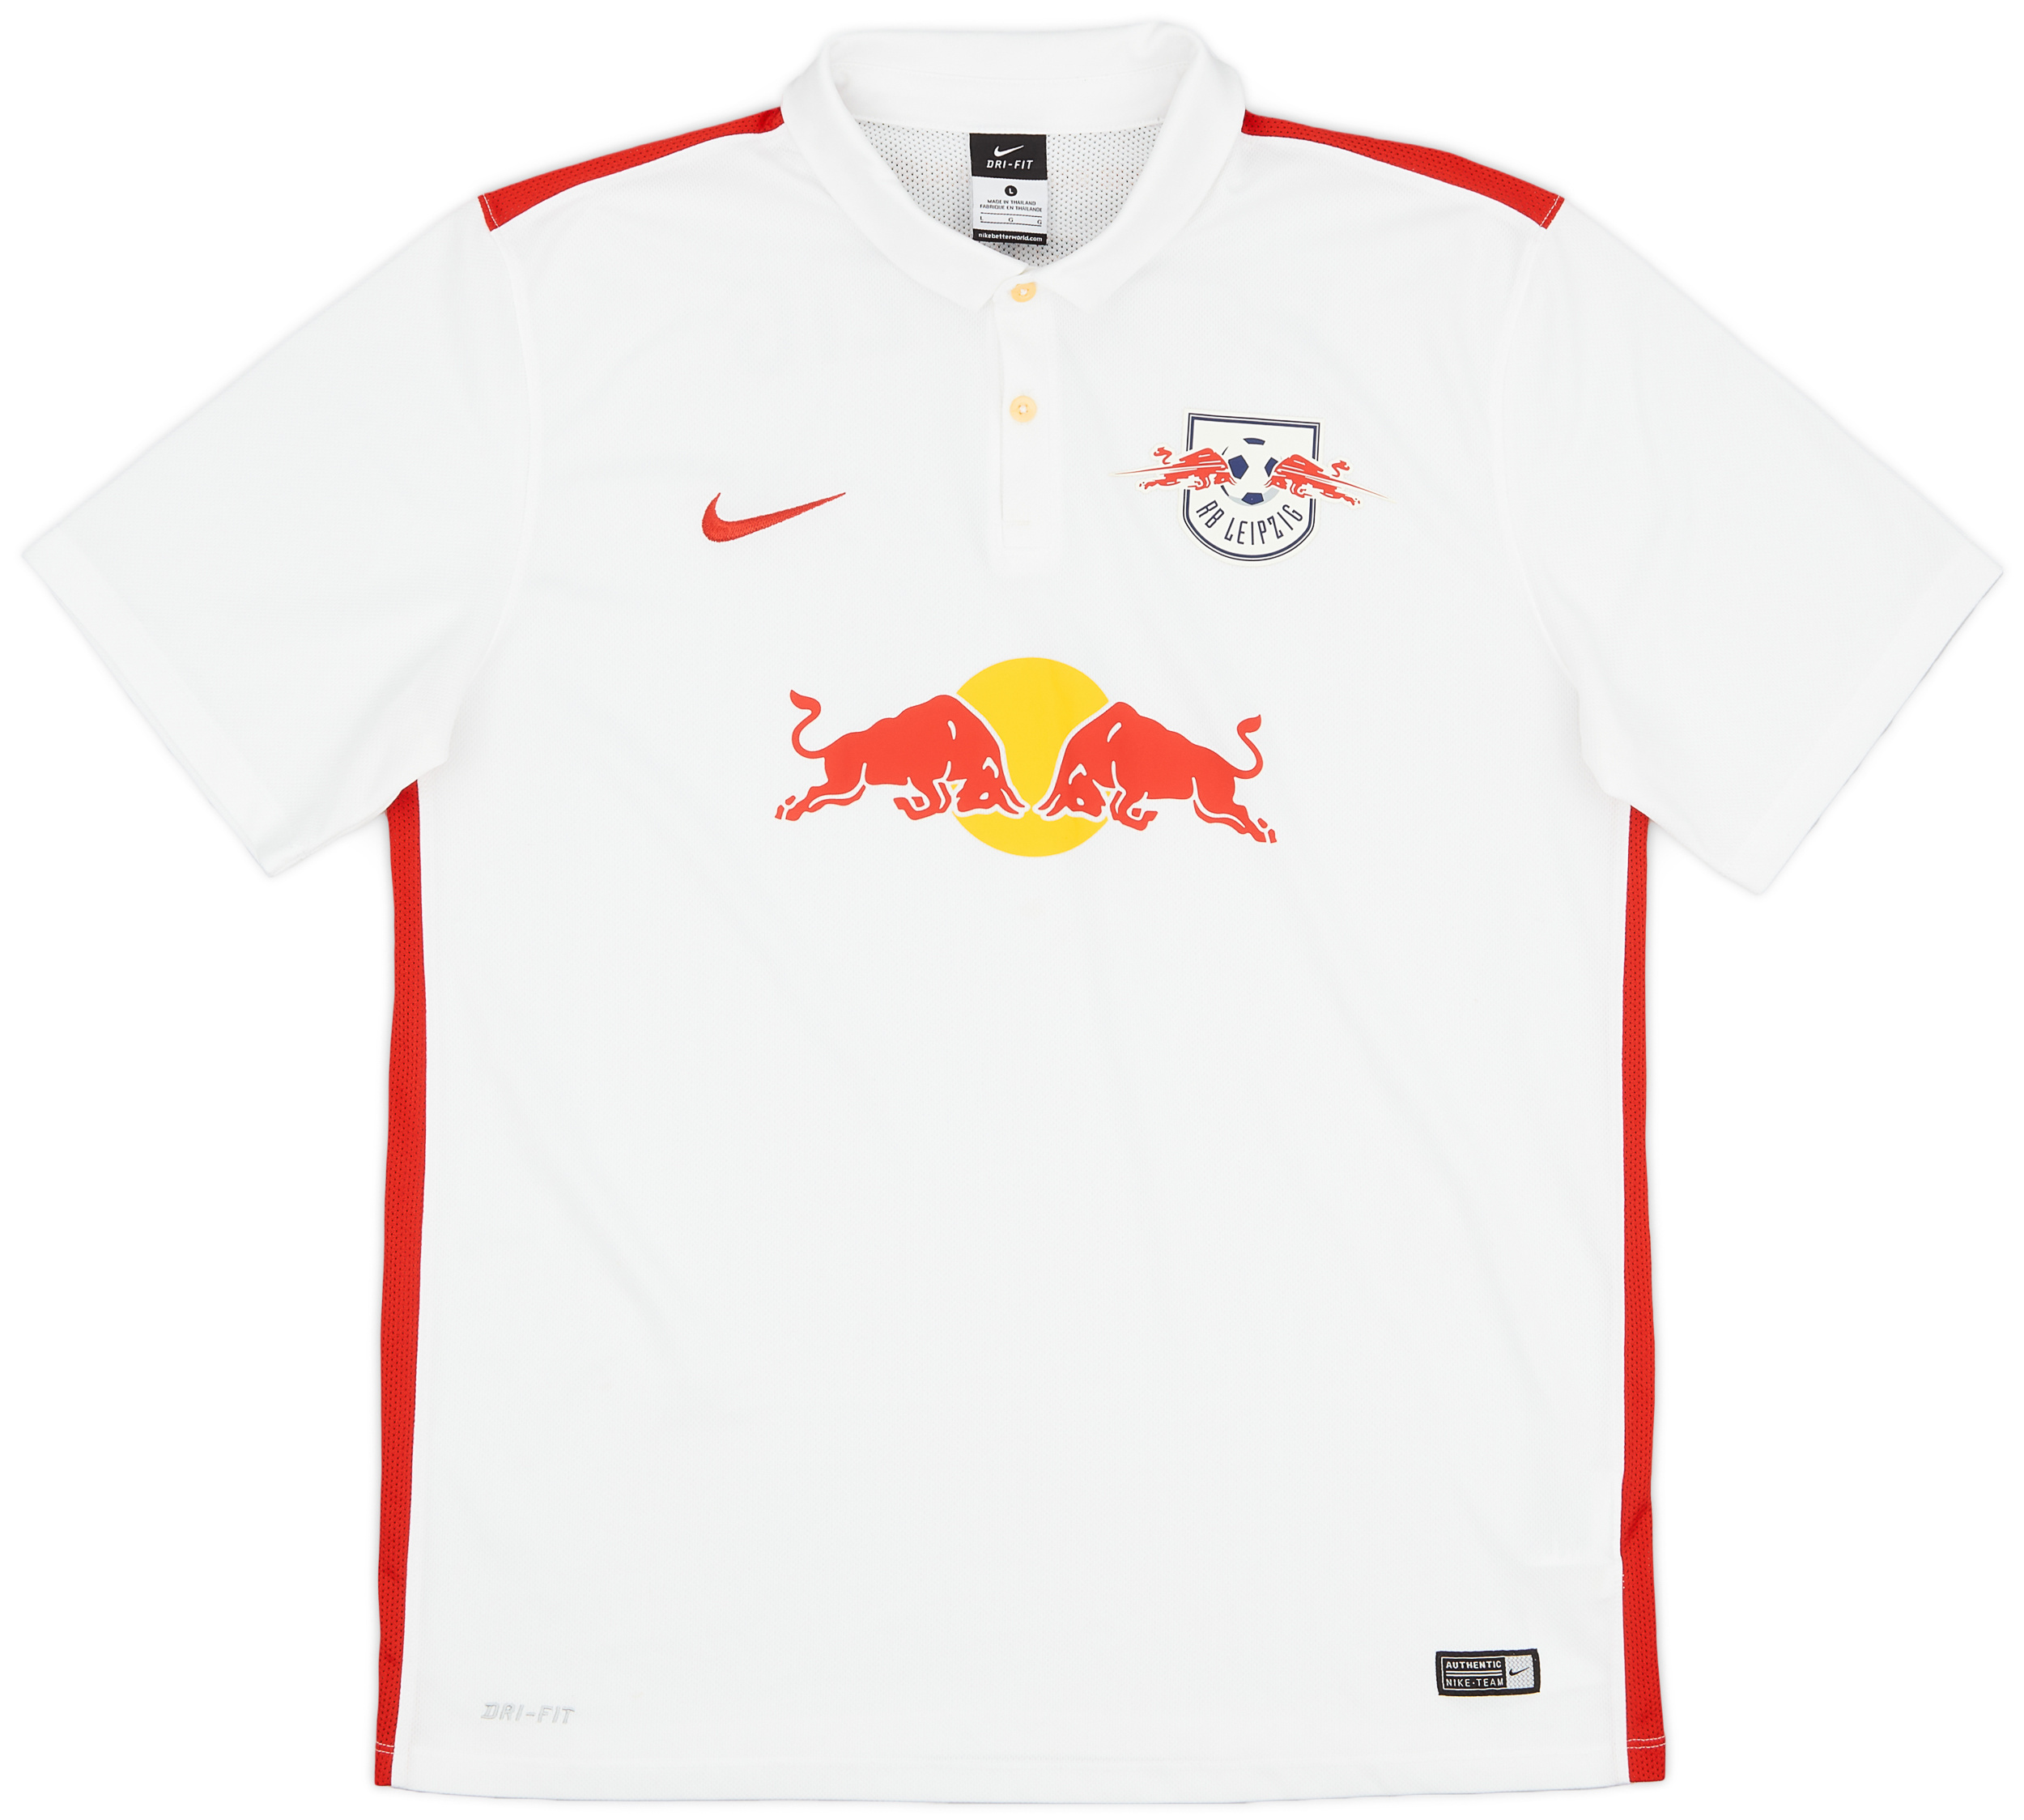 RB (Red Bull) Leipzig Football Kits, New Shirts & Shorts